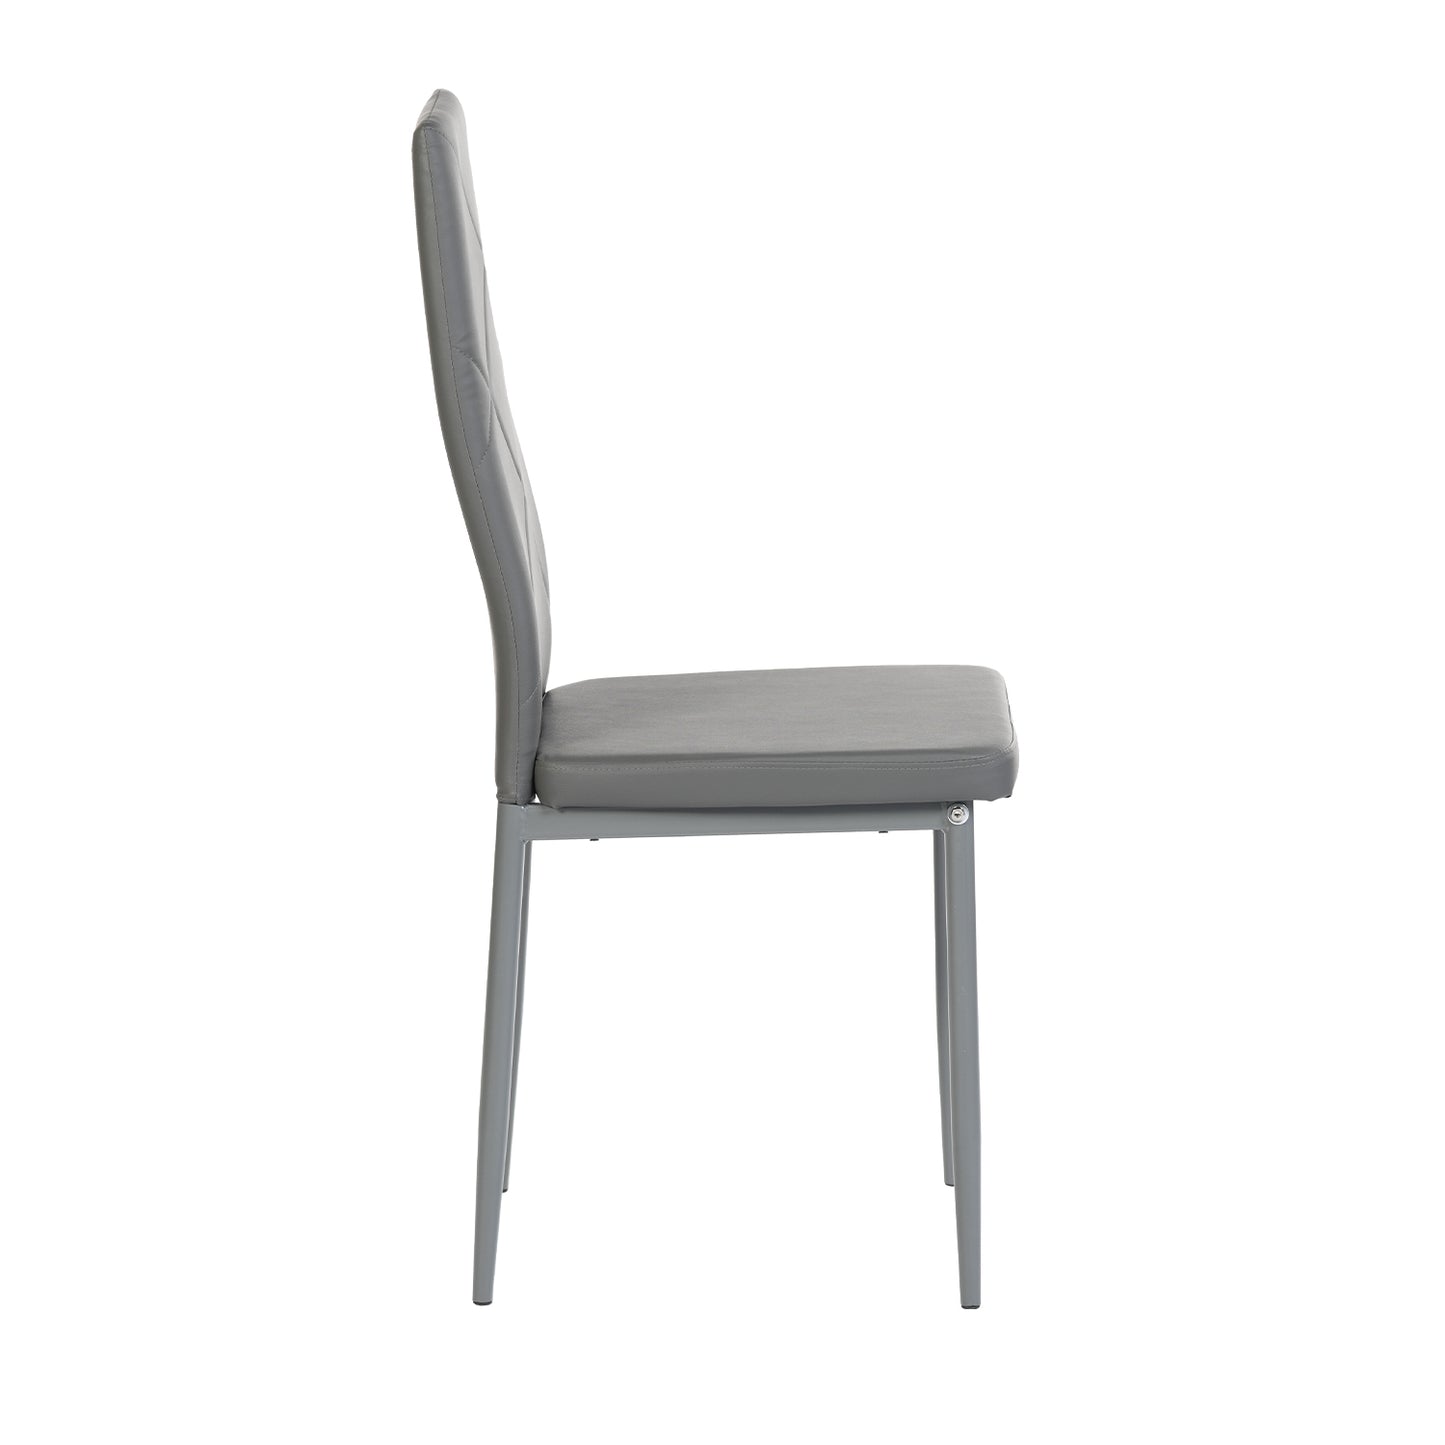 ANN-DIAMOND Upholstered Dining Chair with Iron Legs - Dark Gray